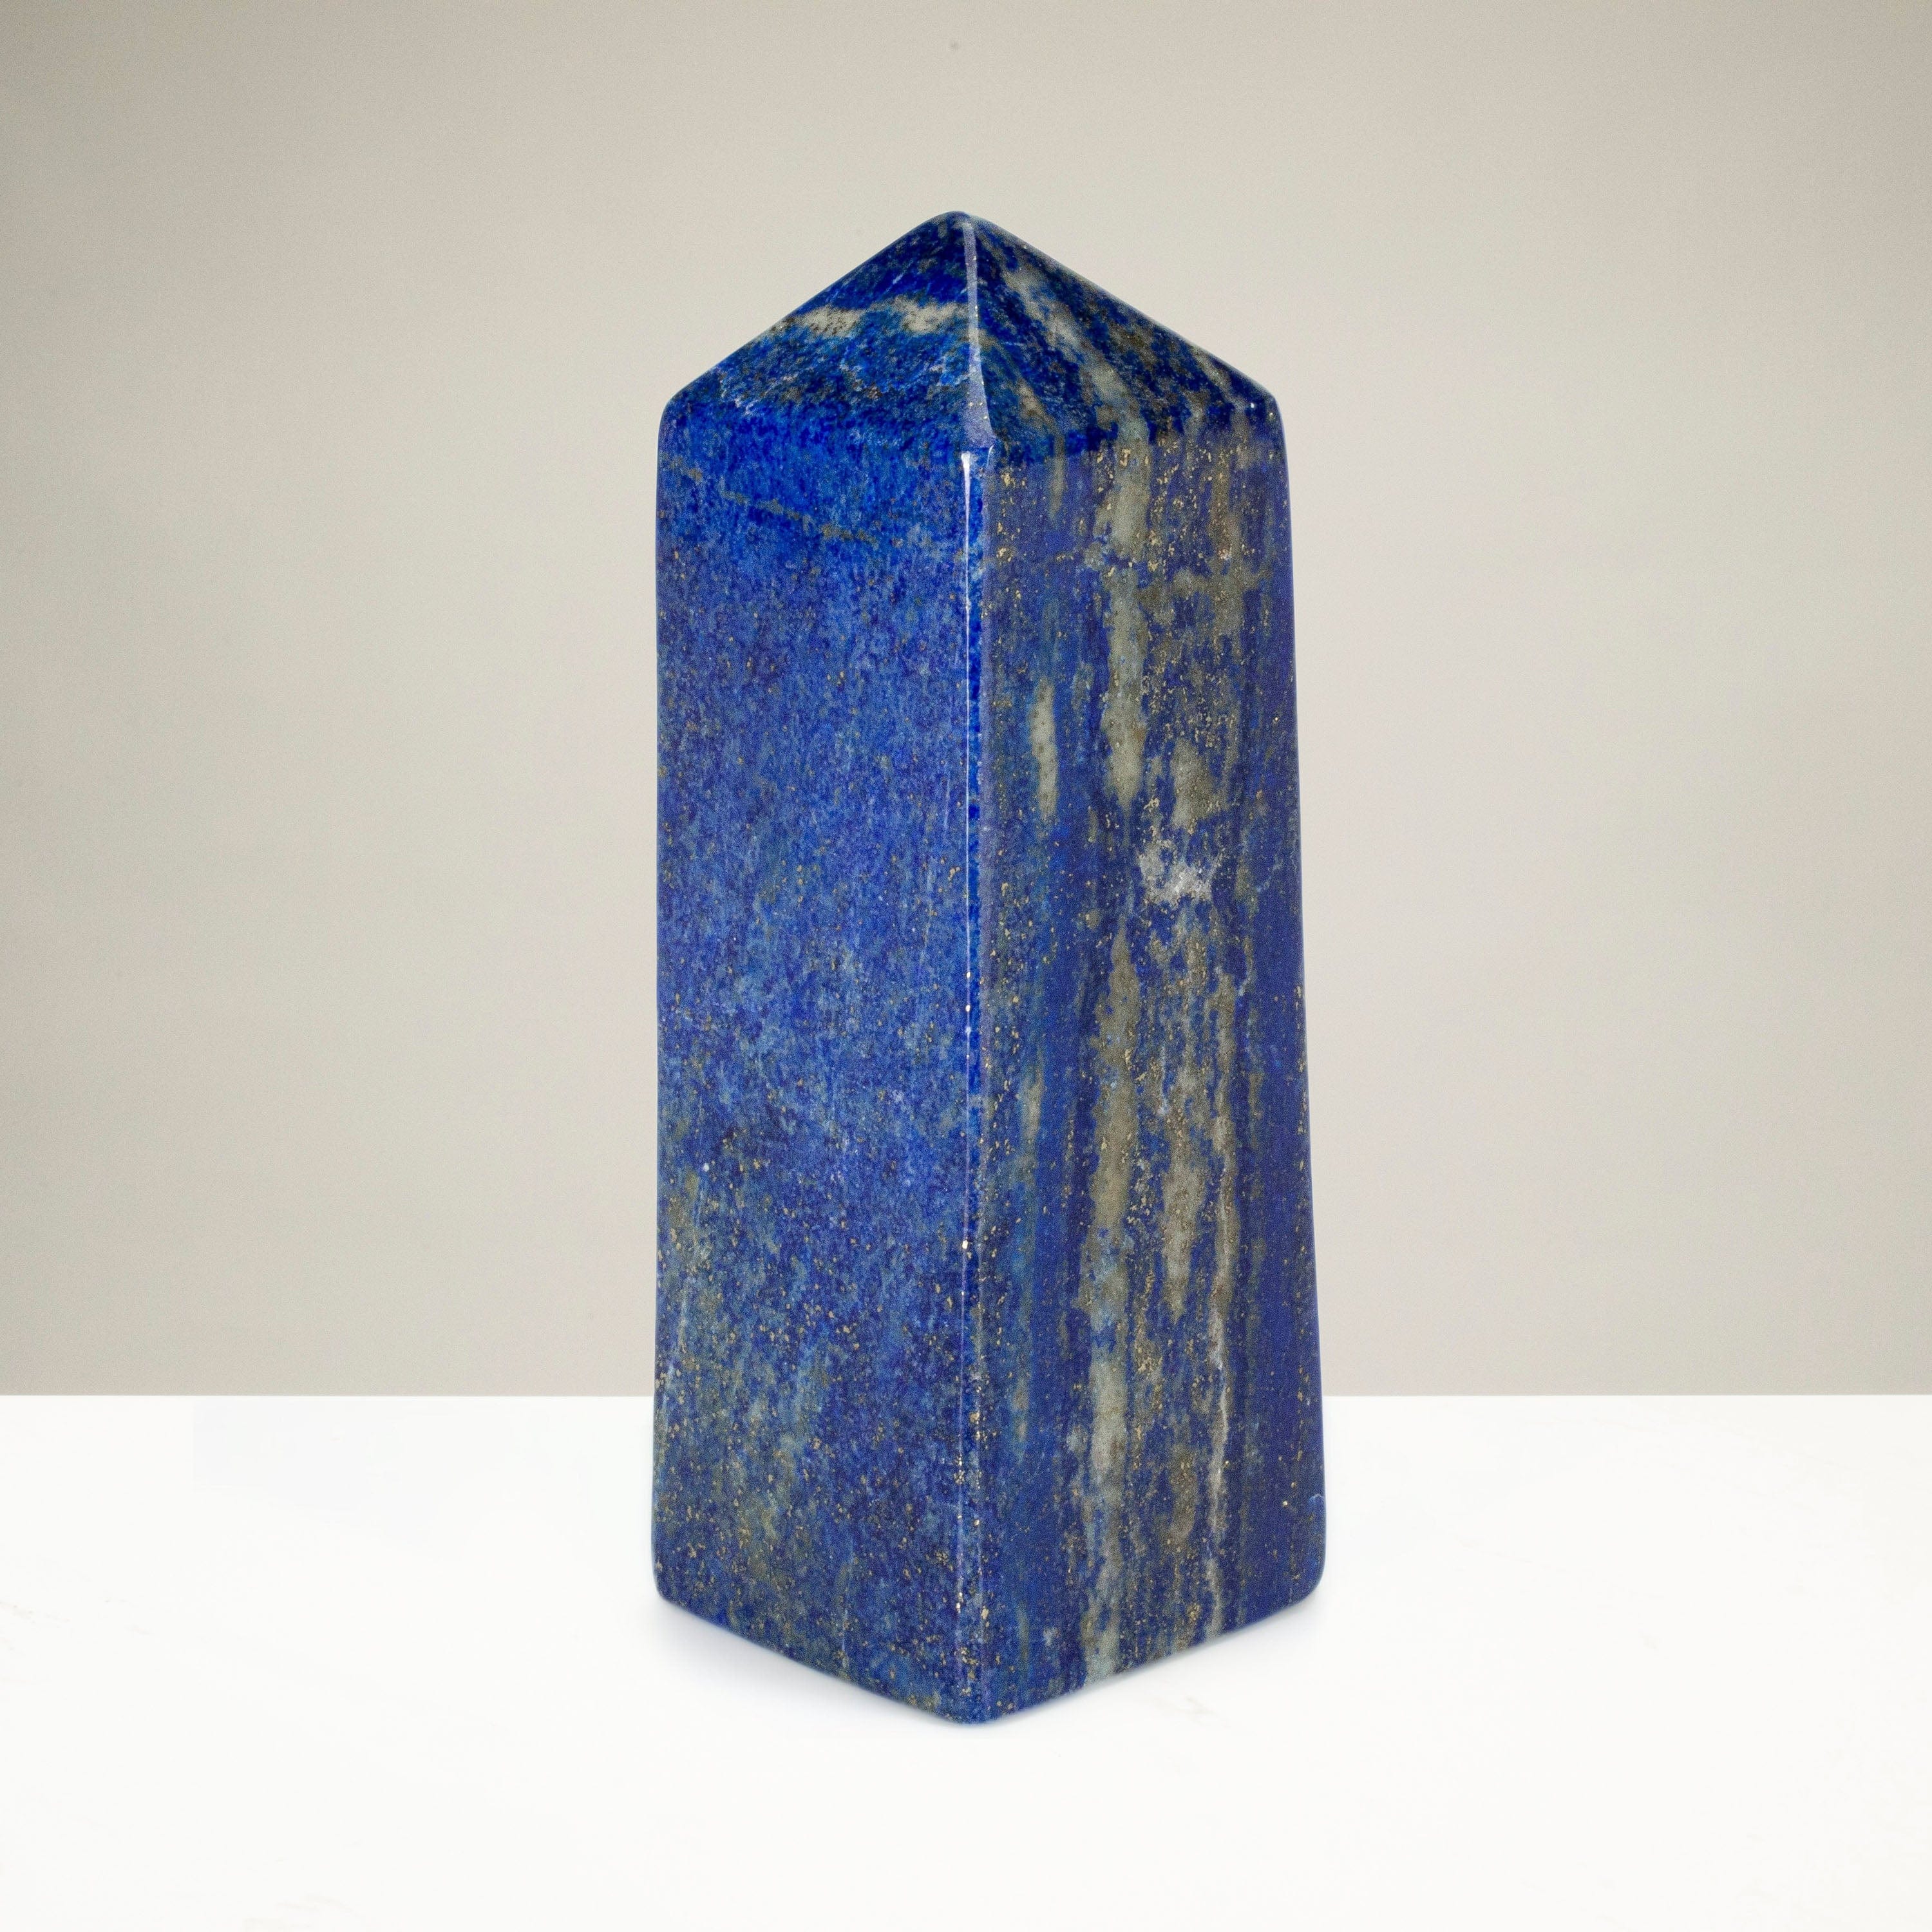 Kalifano Lapis Lapis Lazuli Polished Obelisk from Afghanistan - 4" / 285 grams LPOB600.004